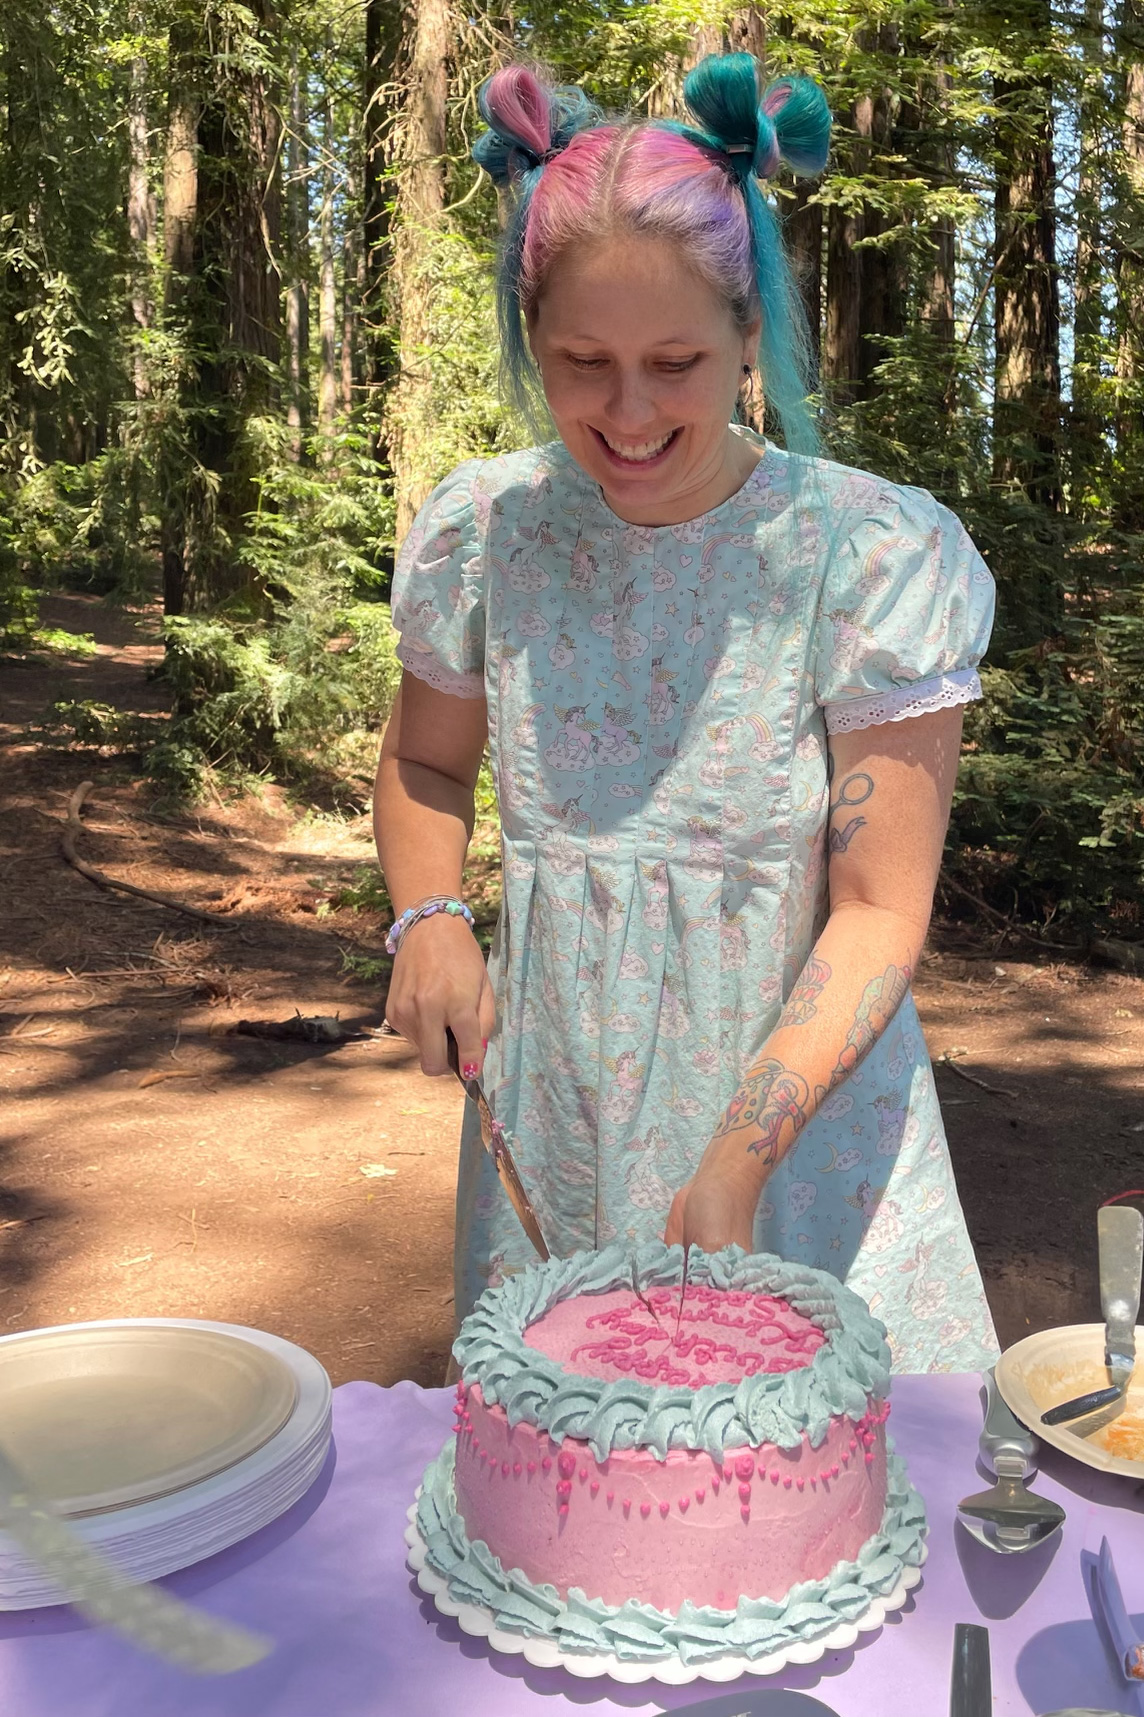 me cutting the nutella birthday cake